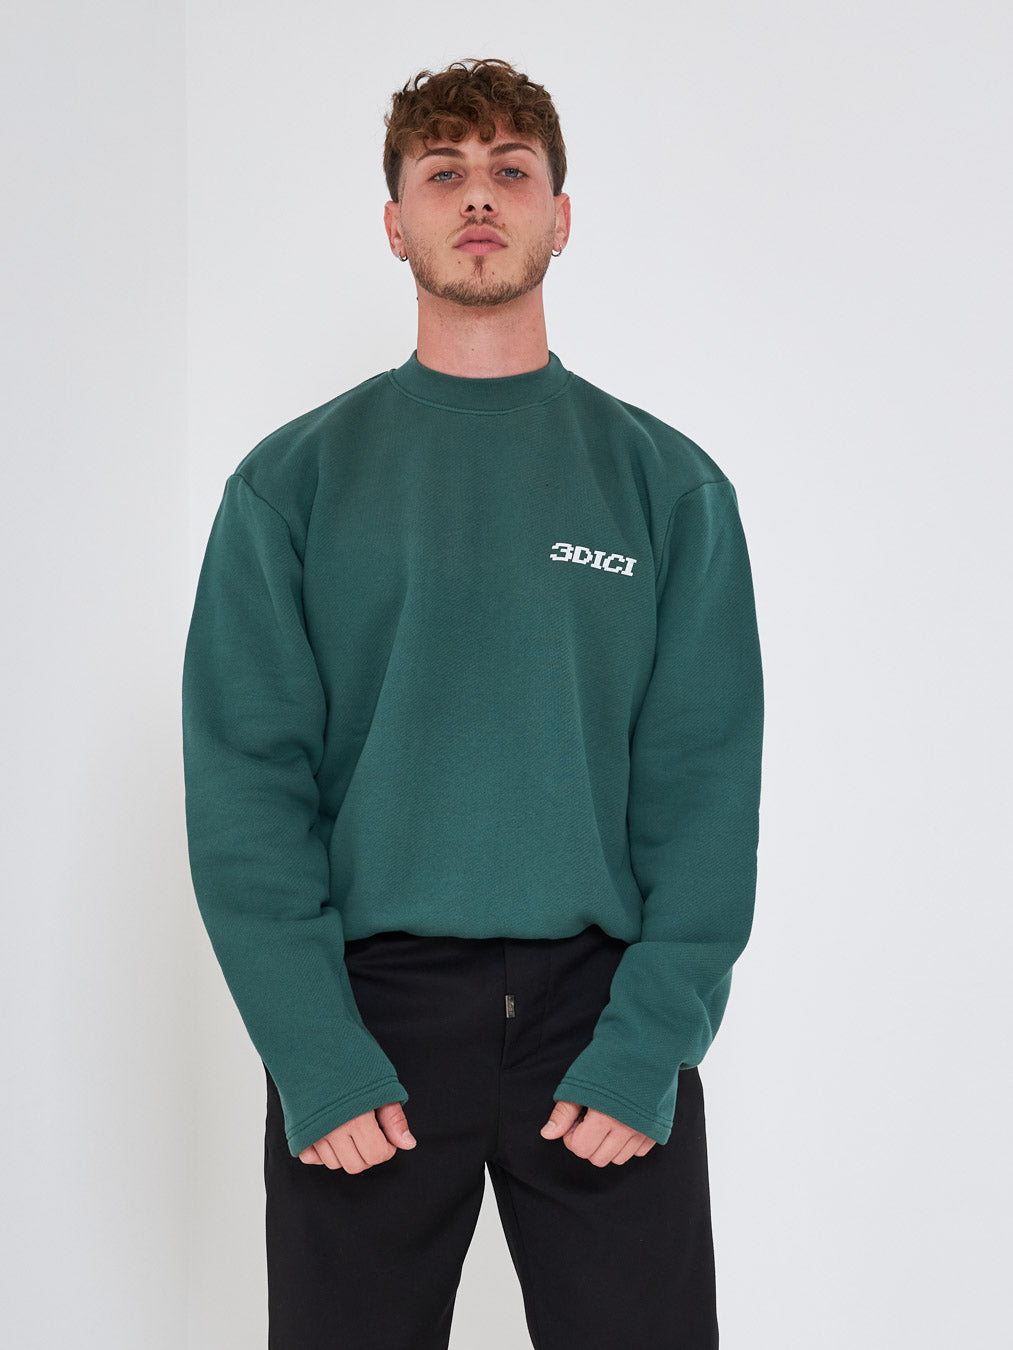 3Dici green crewneck sweatshirt with logo embroidery